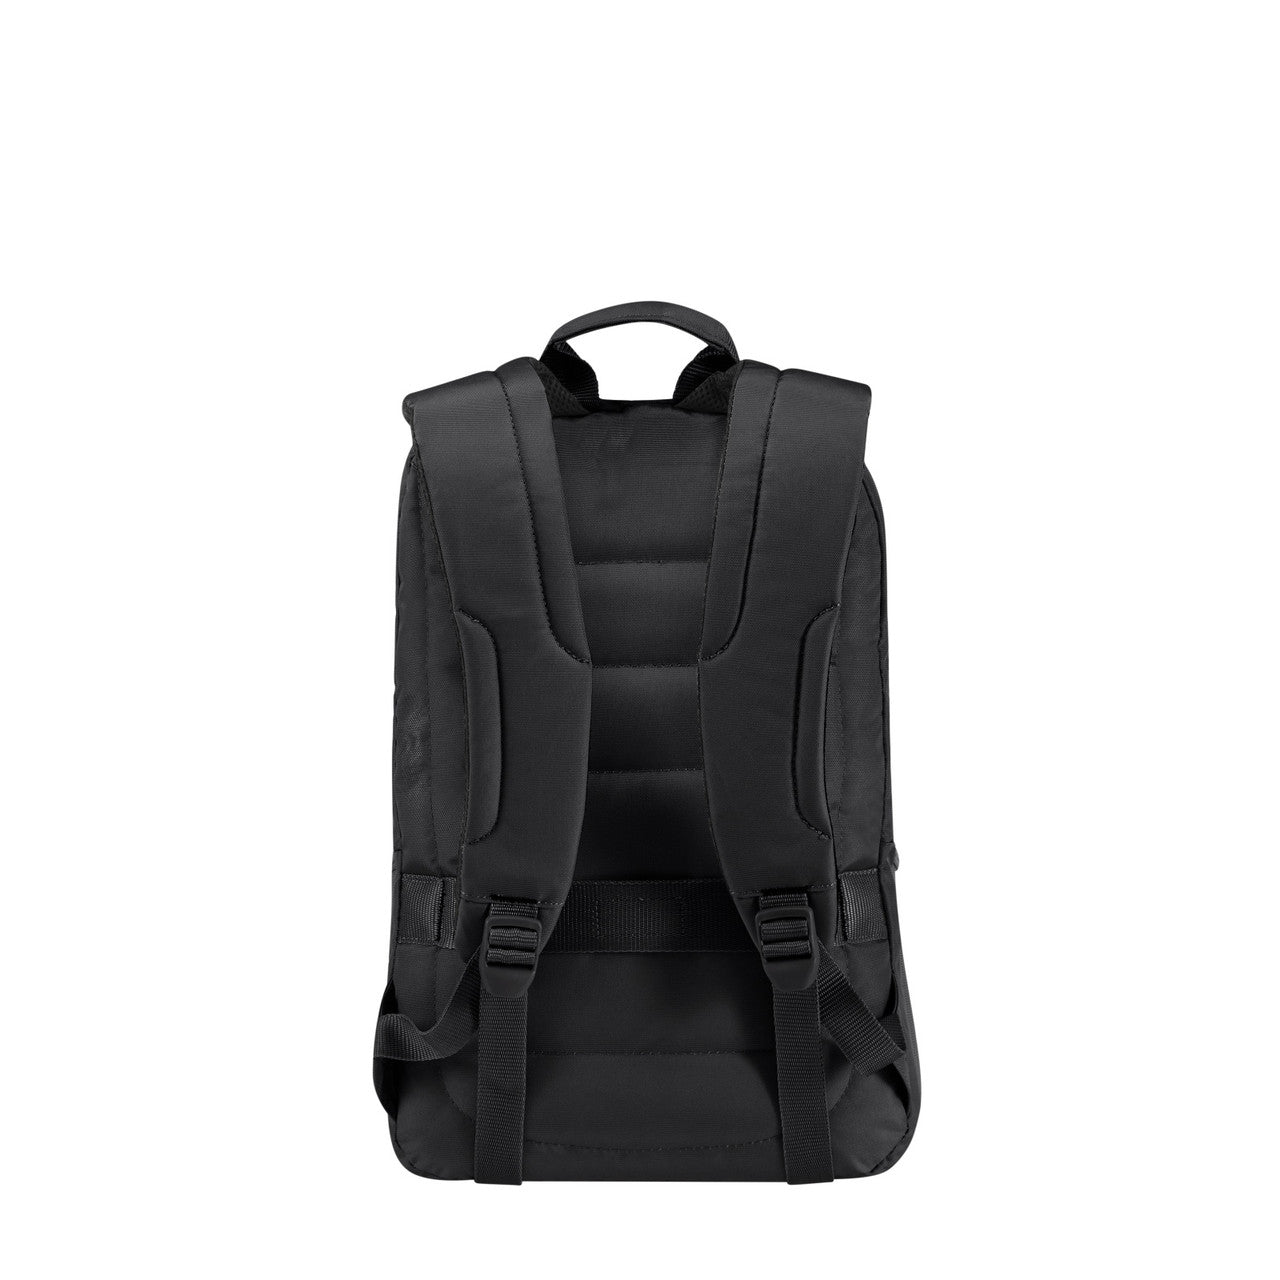 Samsonite - GUARDIT CLASSY 15.6in Backpack - Black - 0